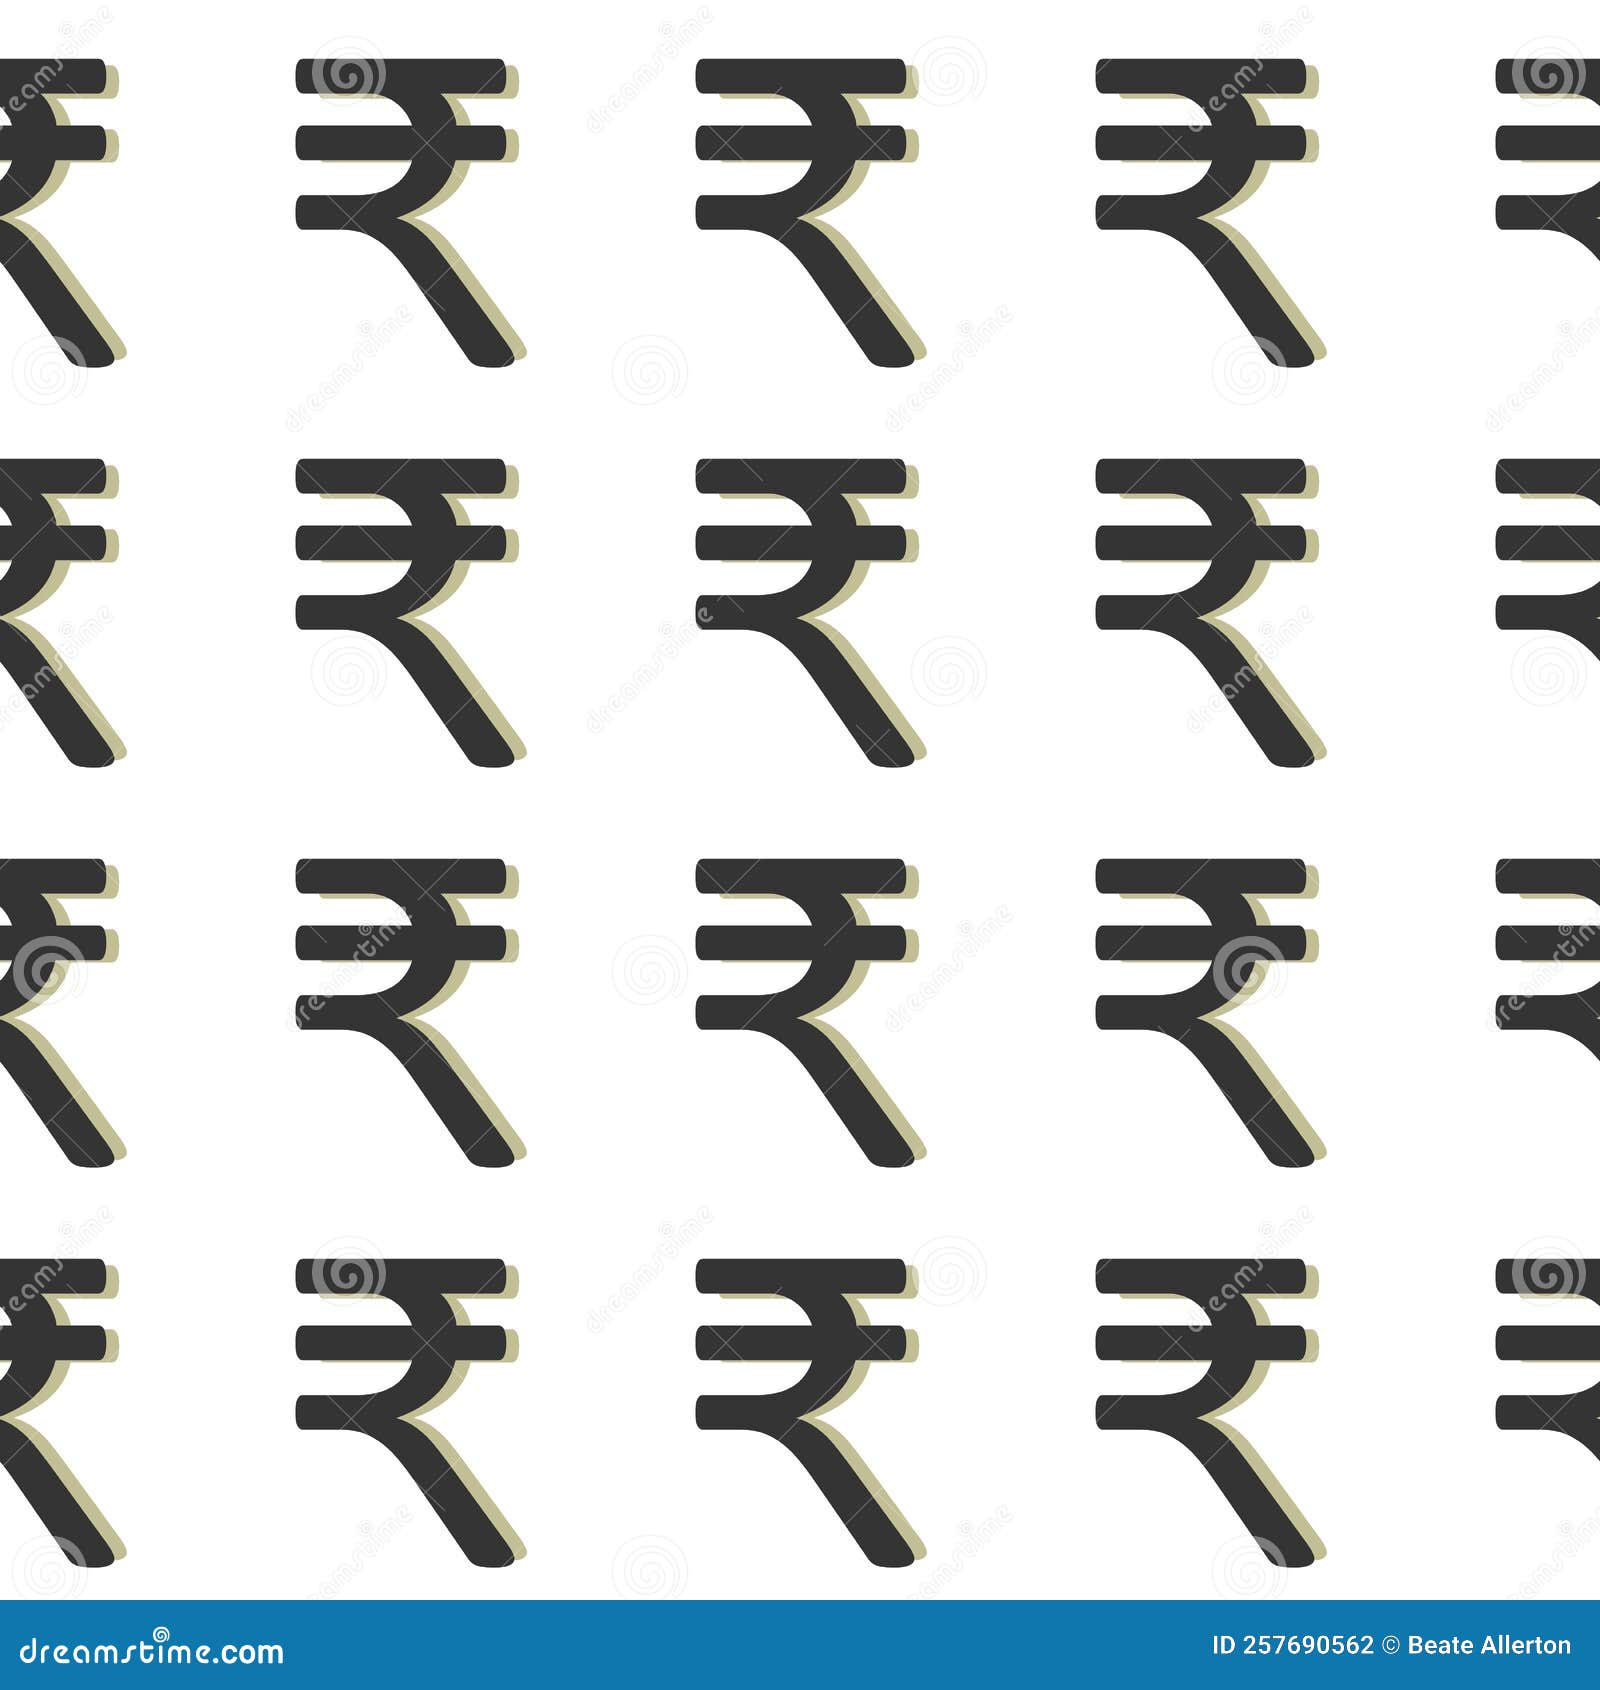 Black sketch indian currency symbol rupee Vector Image